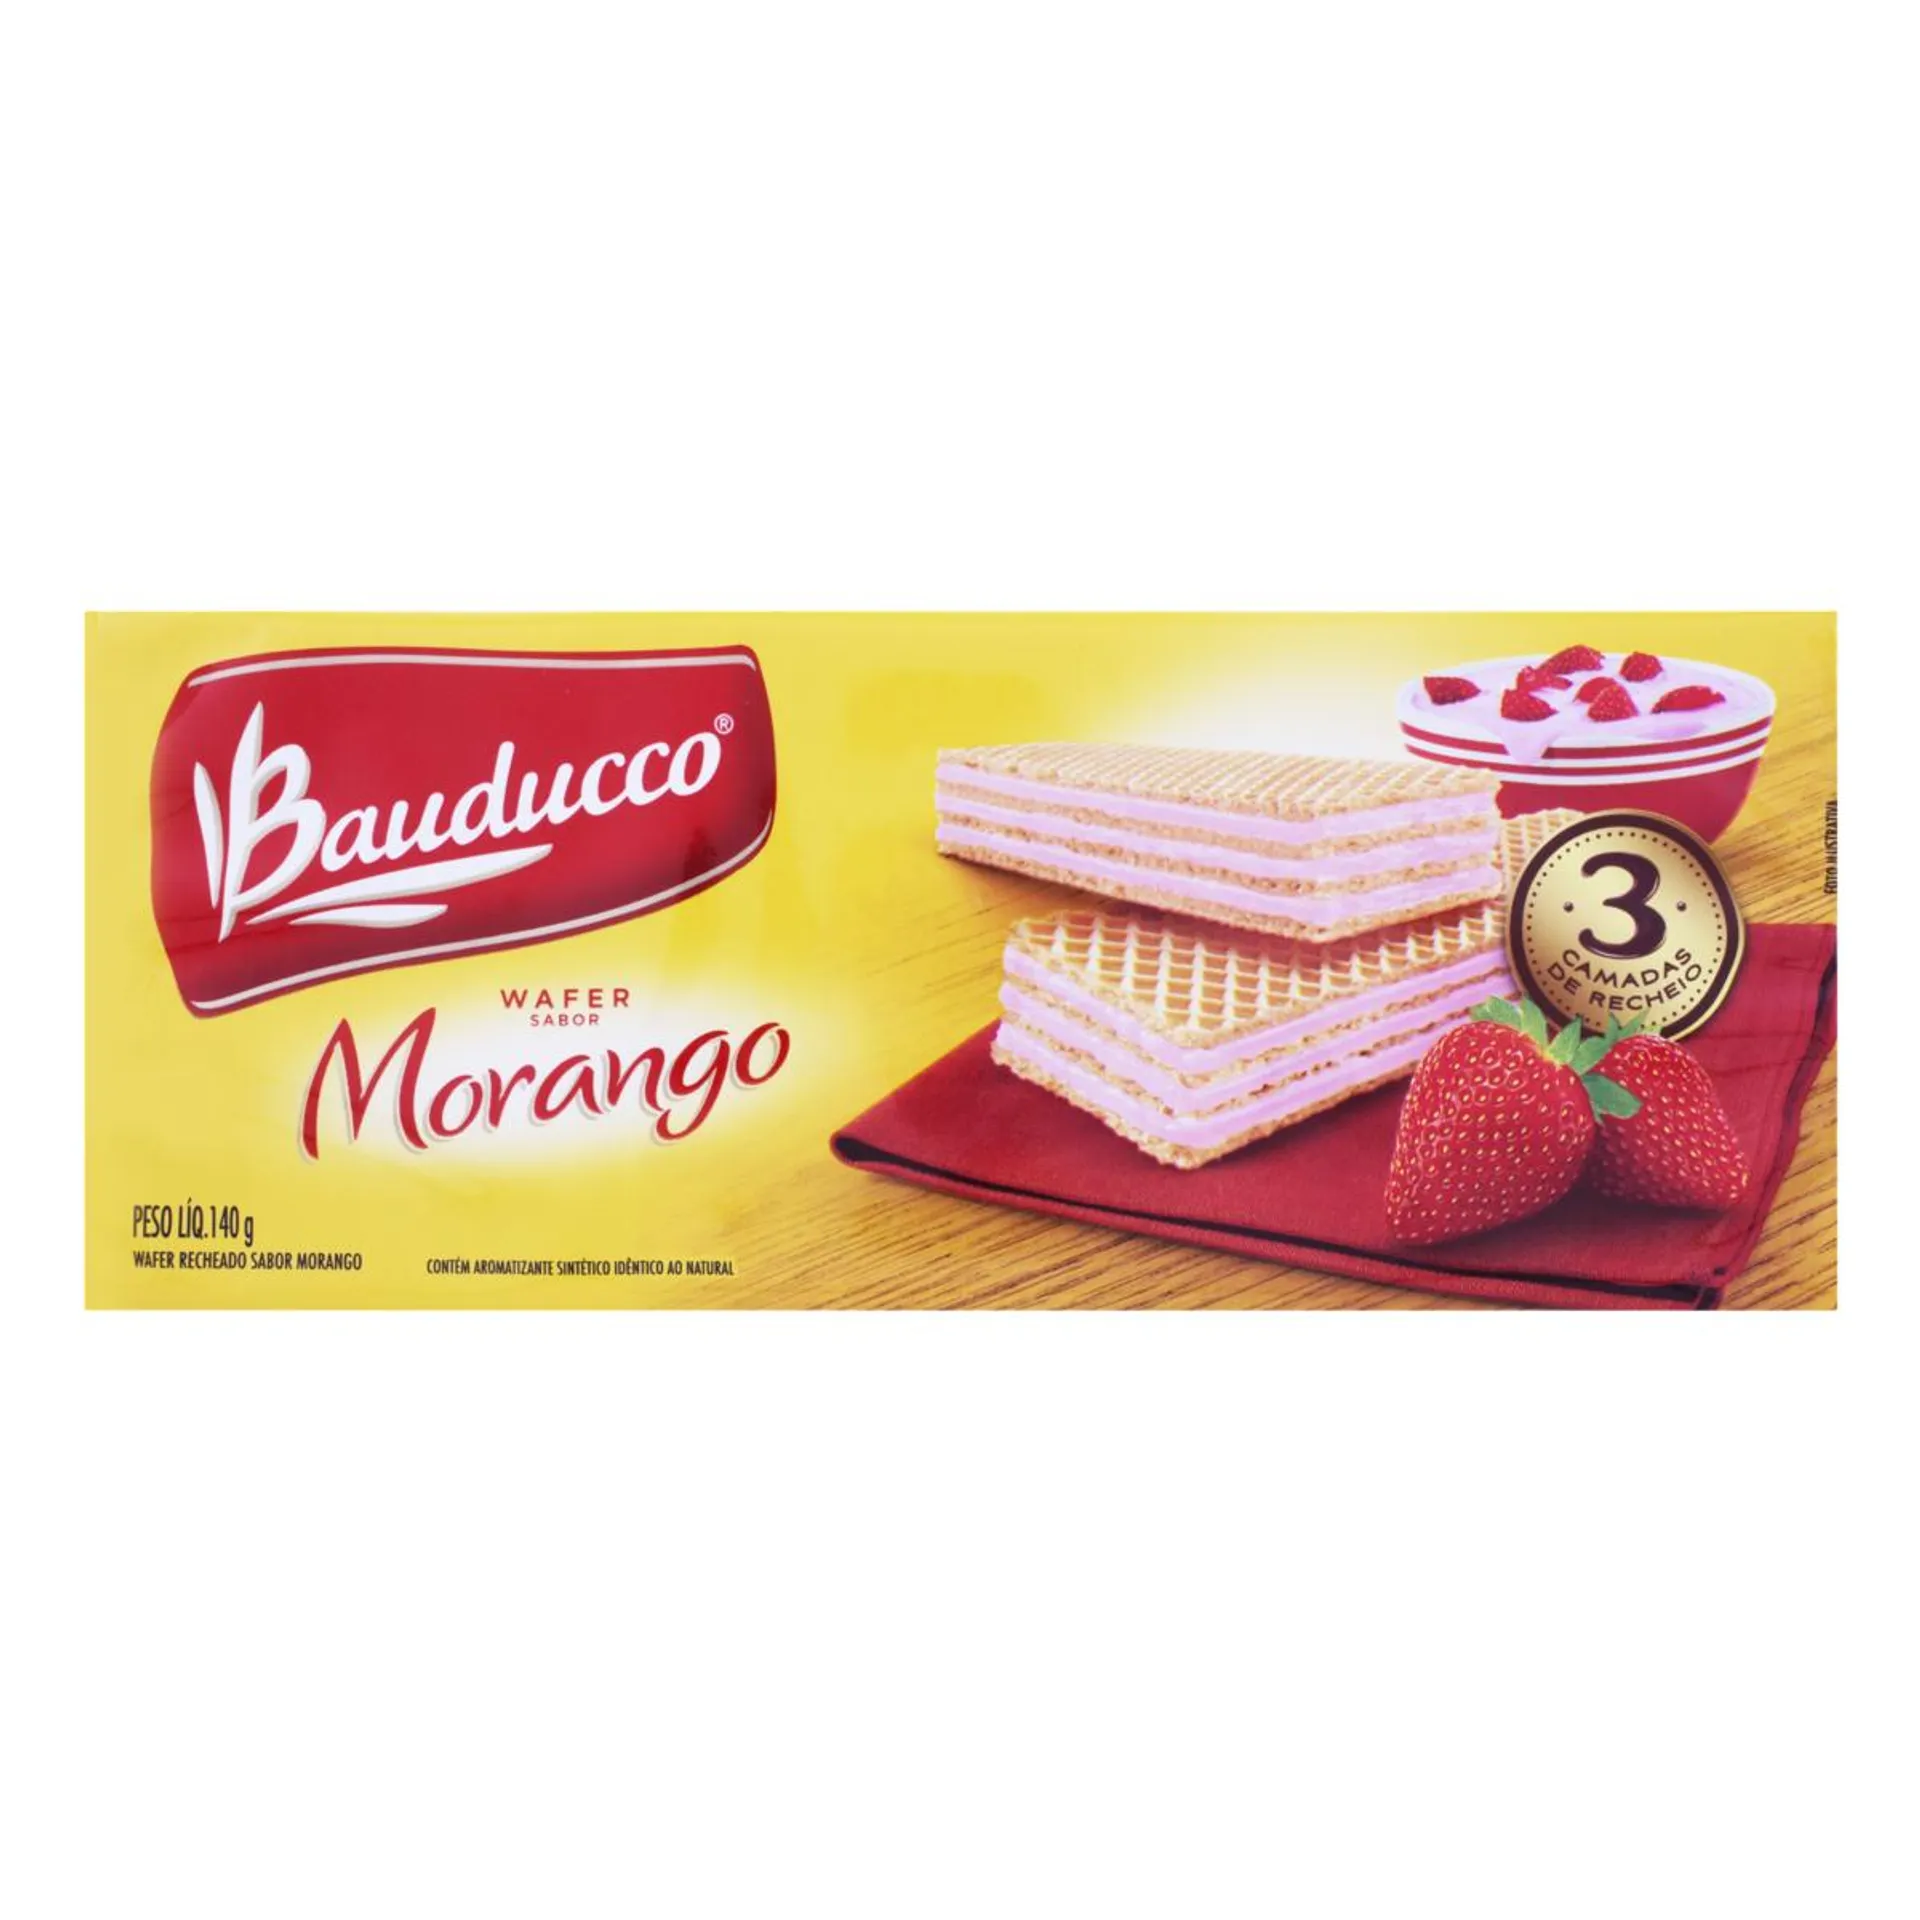 Biscoito BAUDUCCO Wafer de Morango Pacote 140g